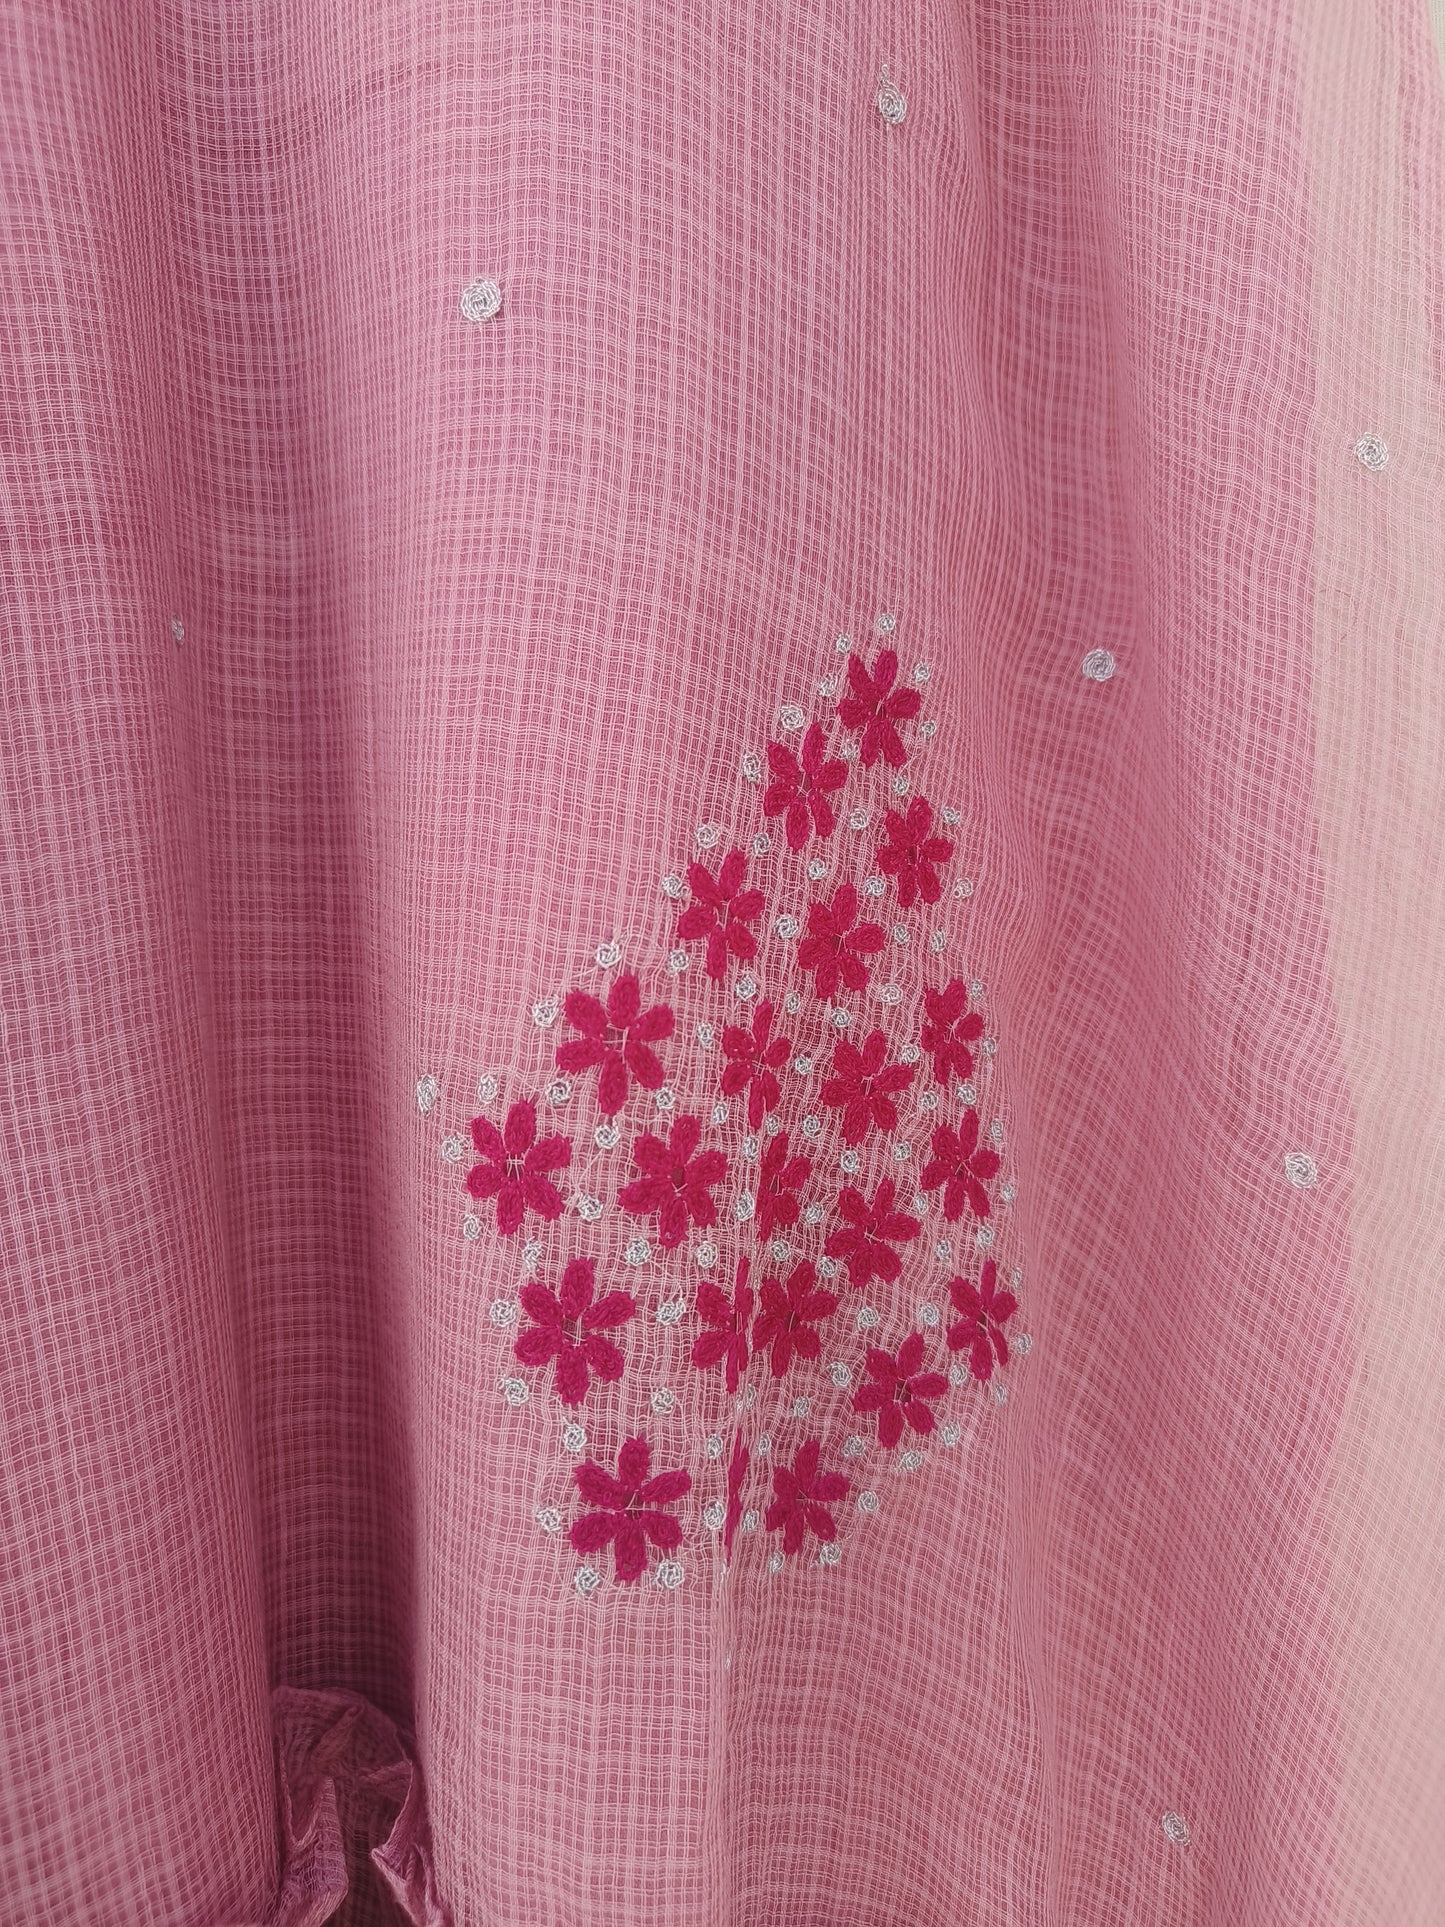 Sorbet Tiered Slip dress w/ Embroidery